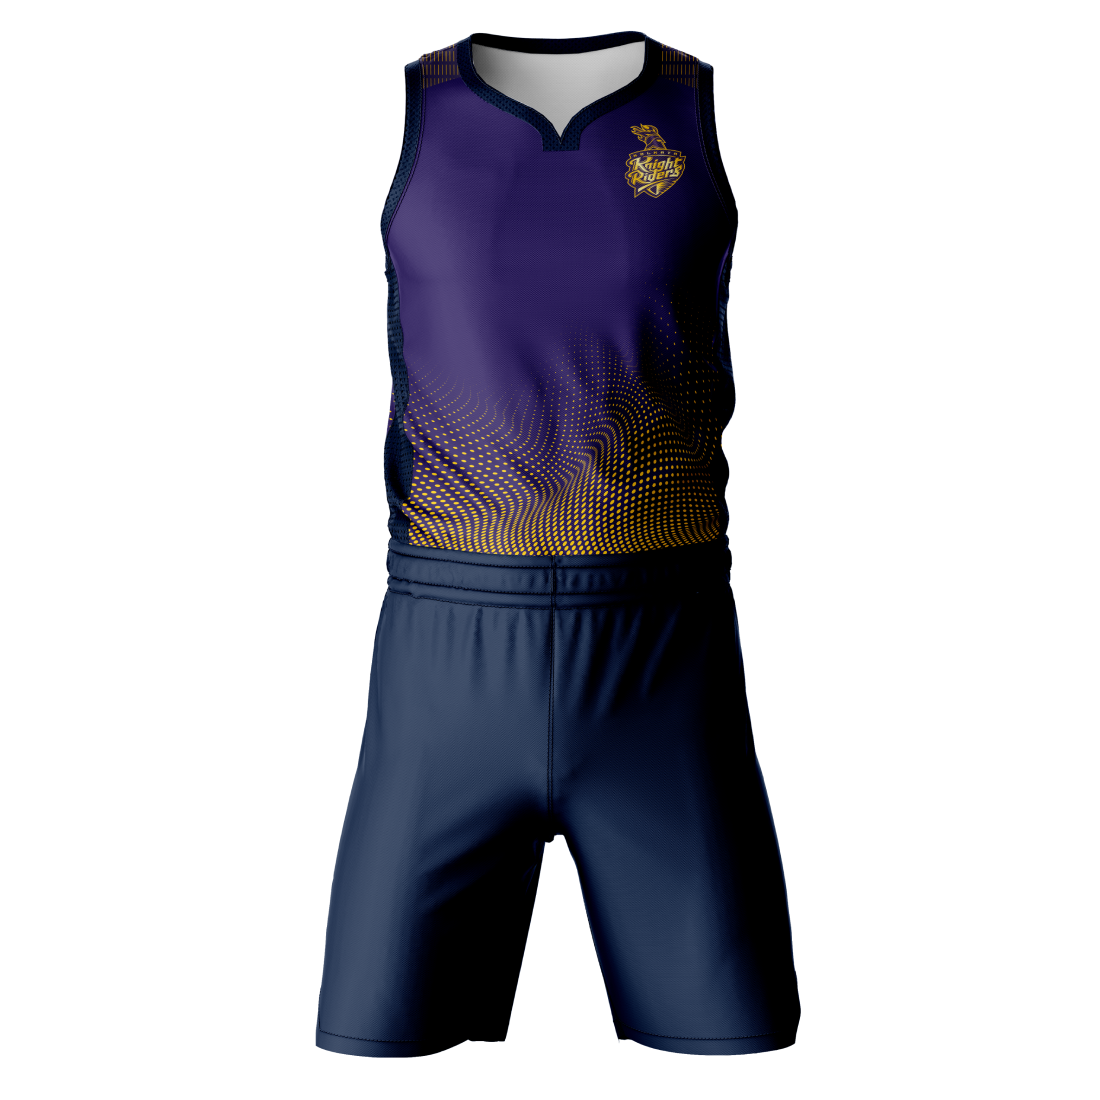 Next Print Ipl Kolkata Design Basketball Jersey With Shorts